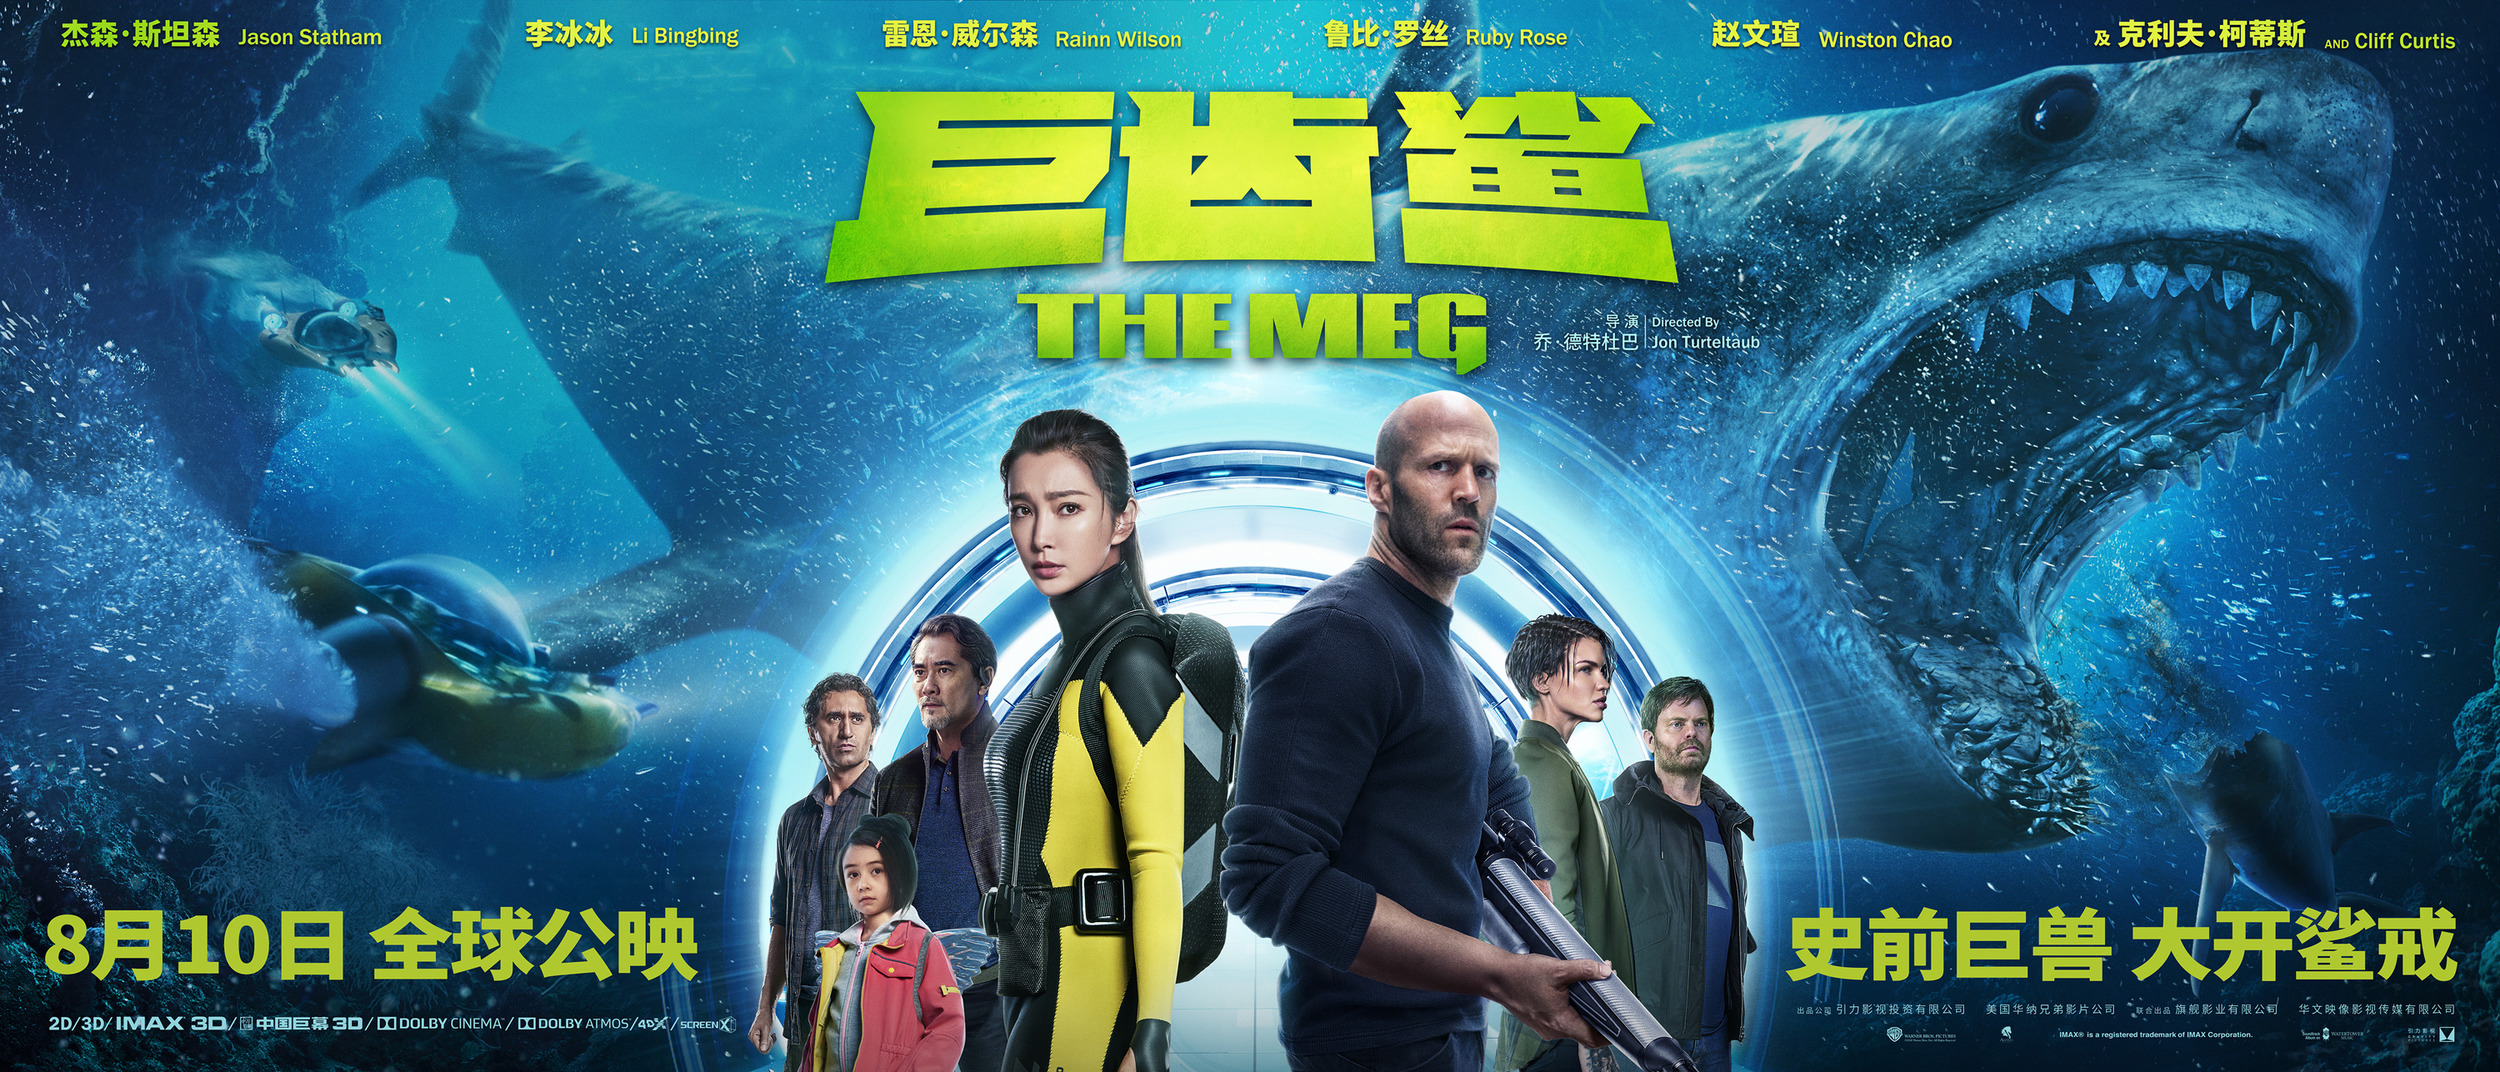 Mega Sized Movie Poster Image for The Meg (#12 of 26)